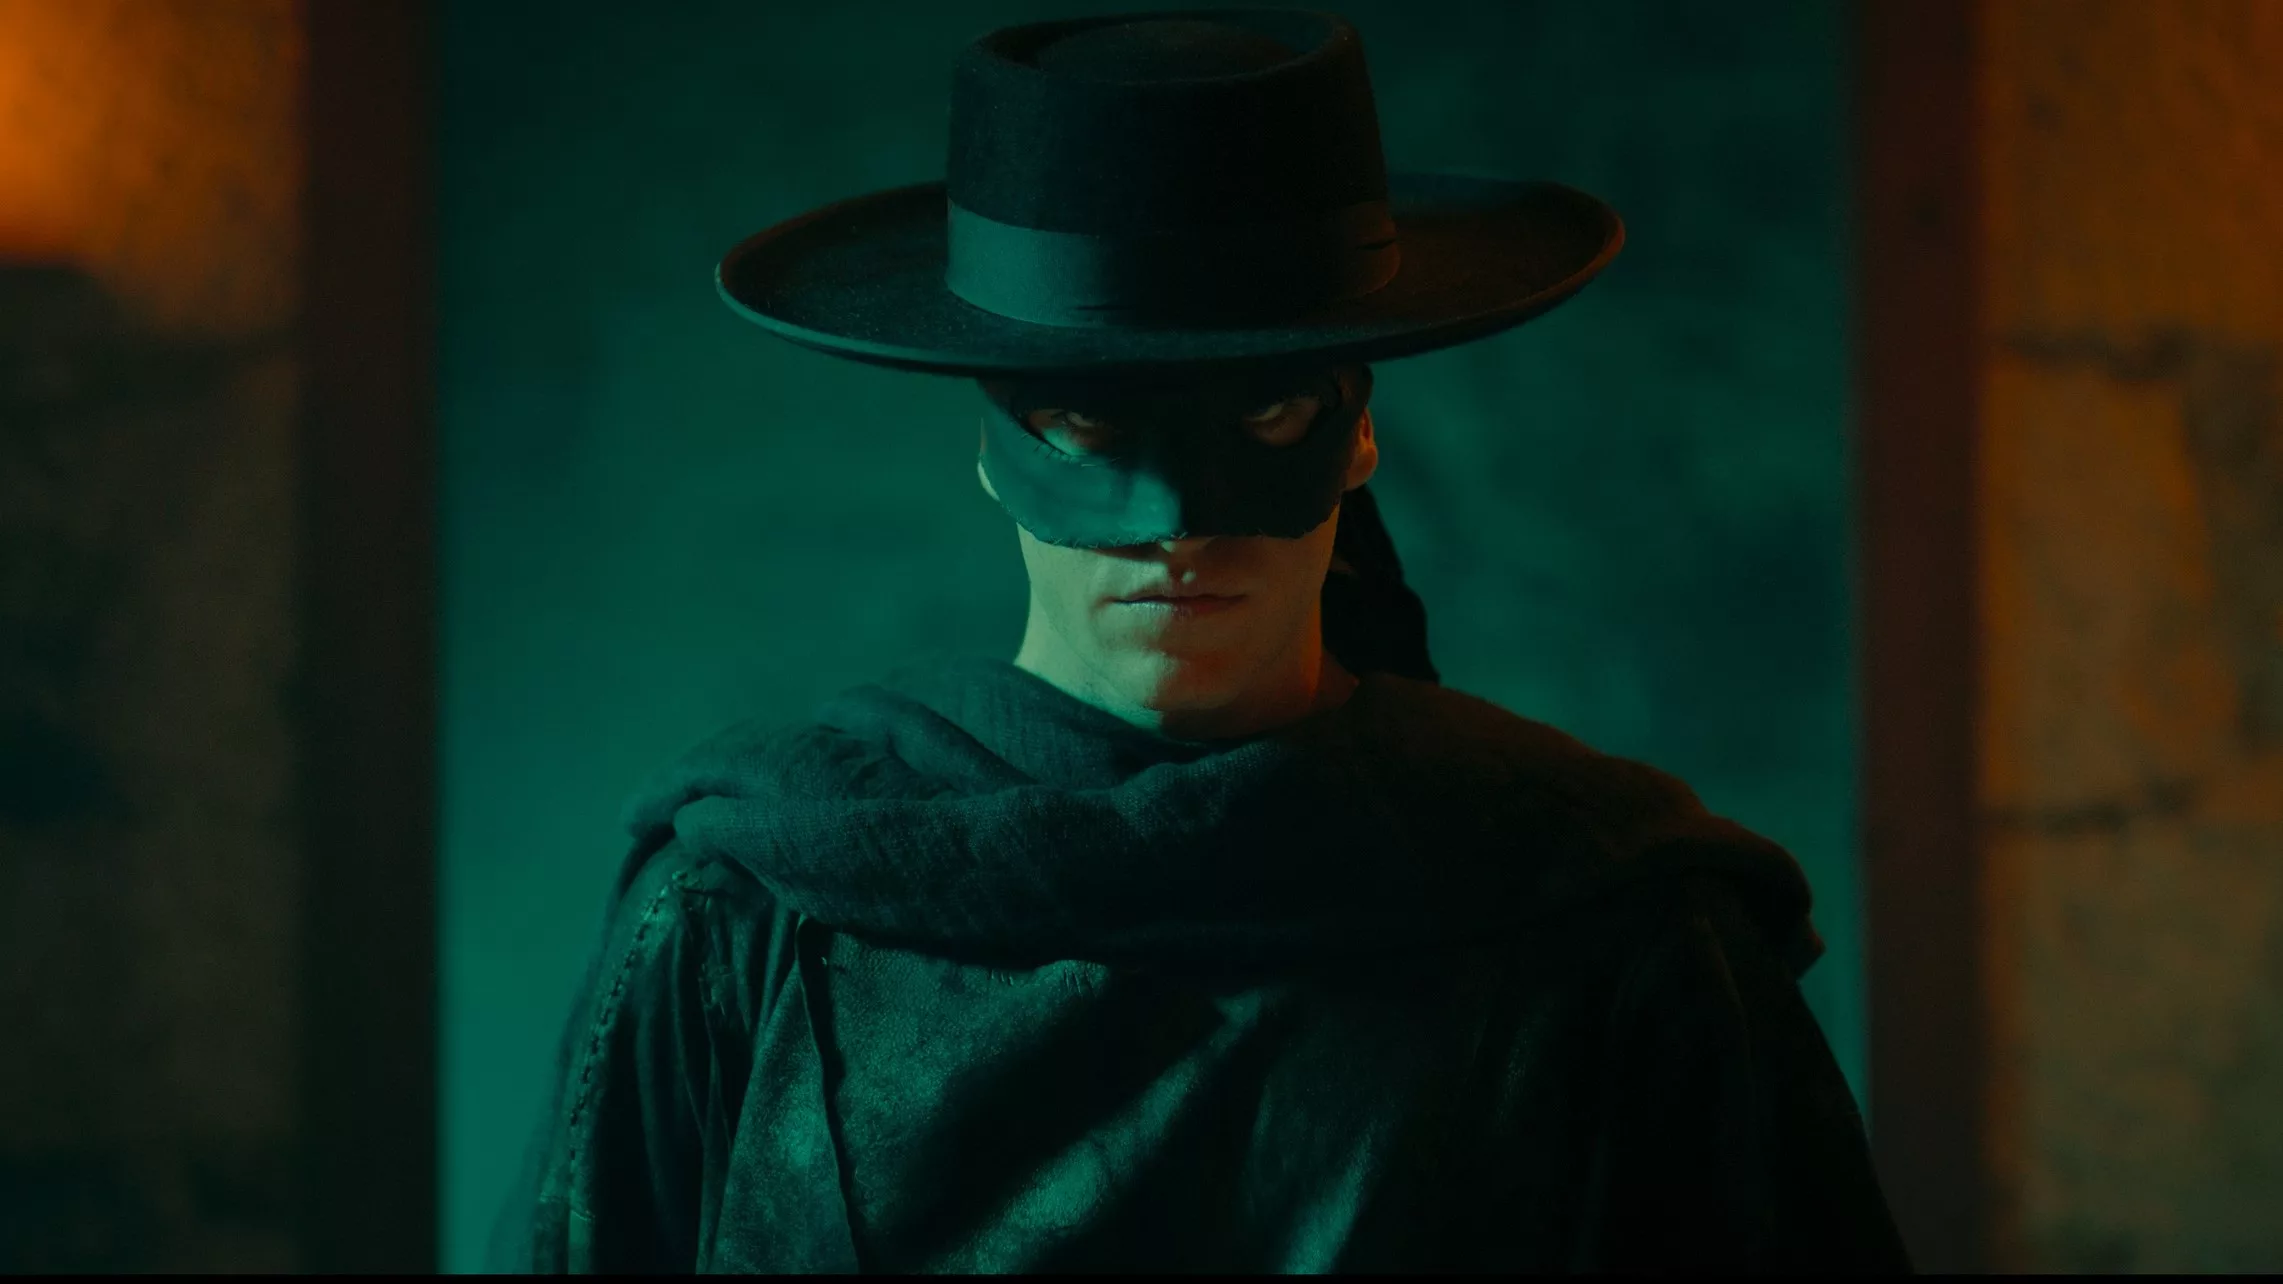 Zorro Review